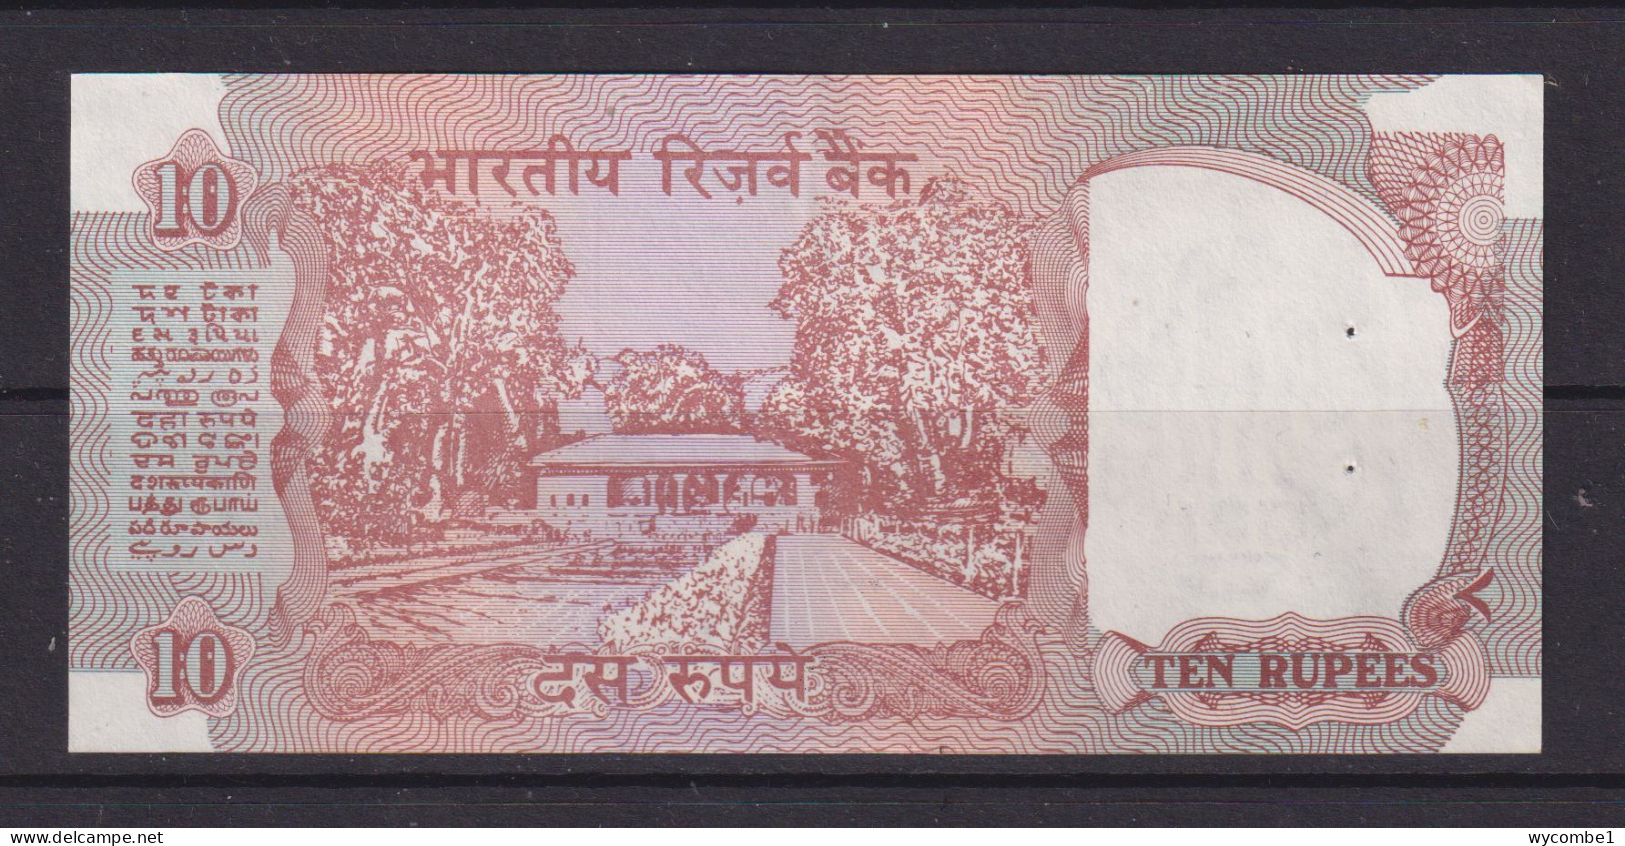 INDIA -  1992-96 10 Rupees UNC/aUNC  Banknote (Pin Holes) - Inde